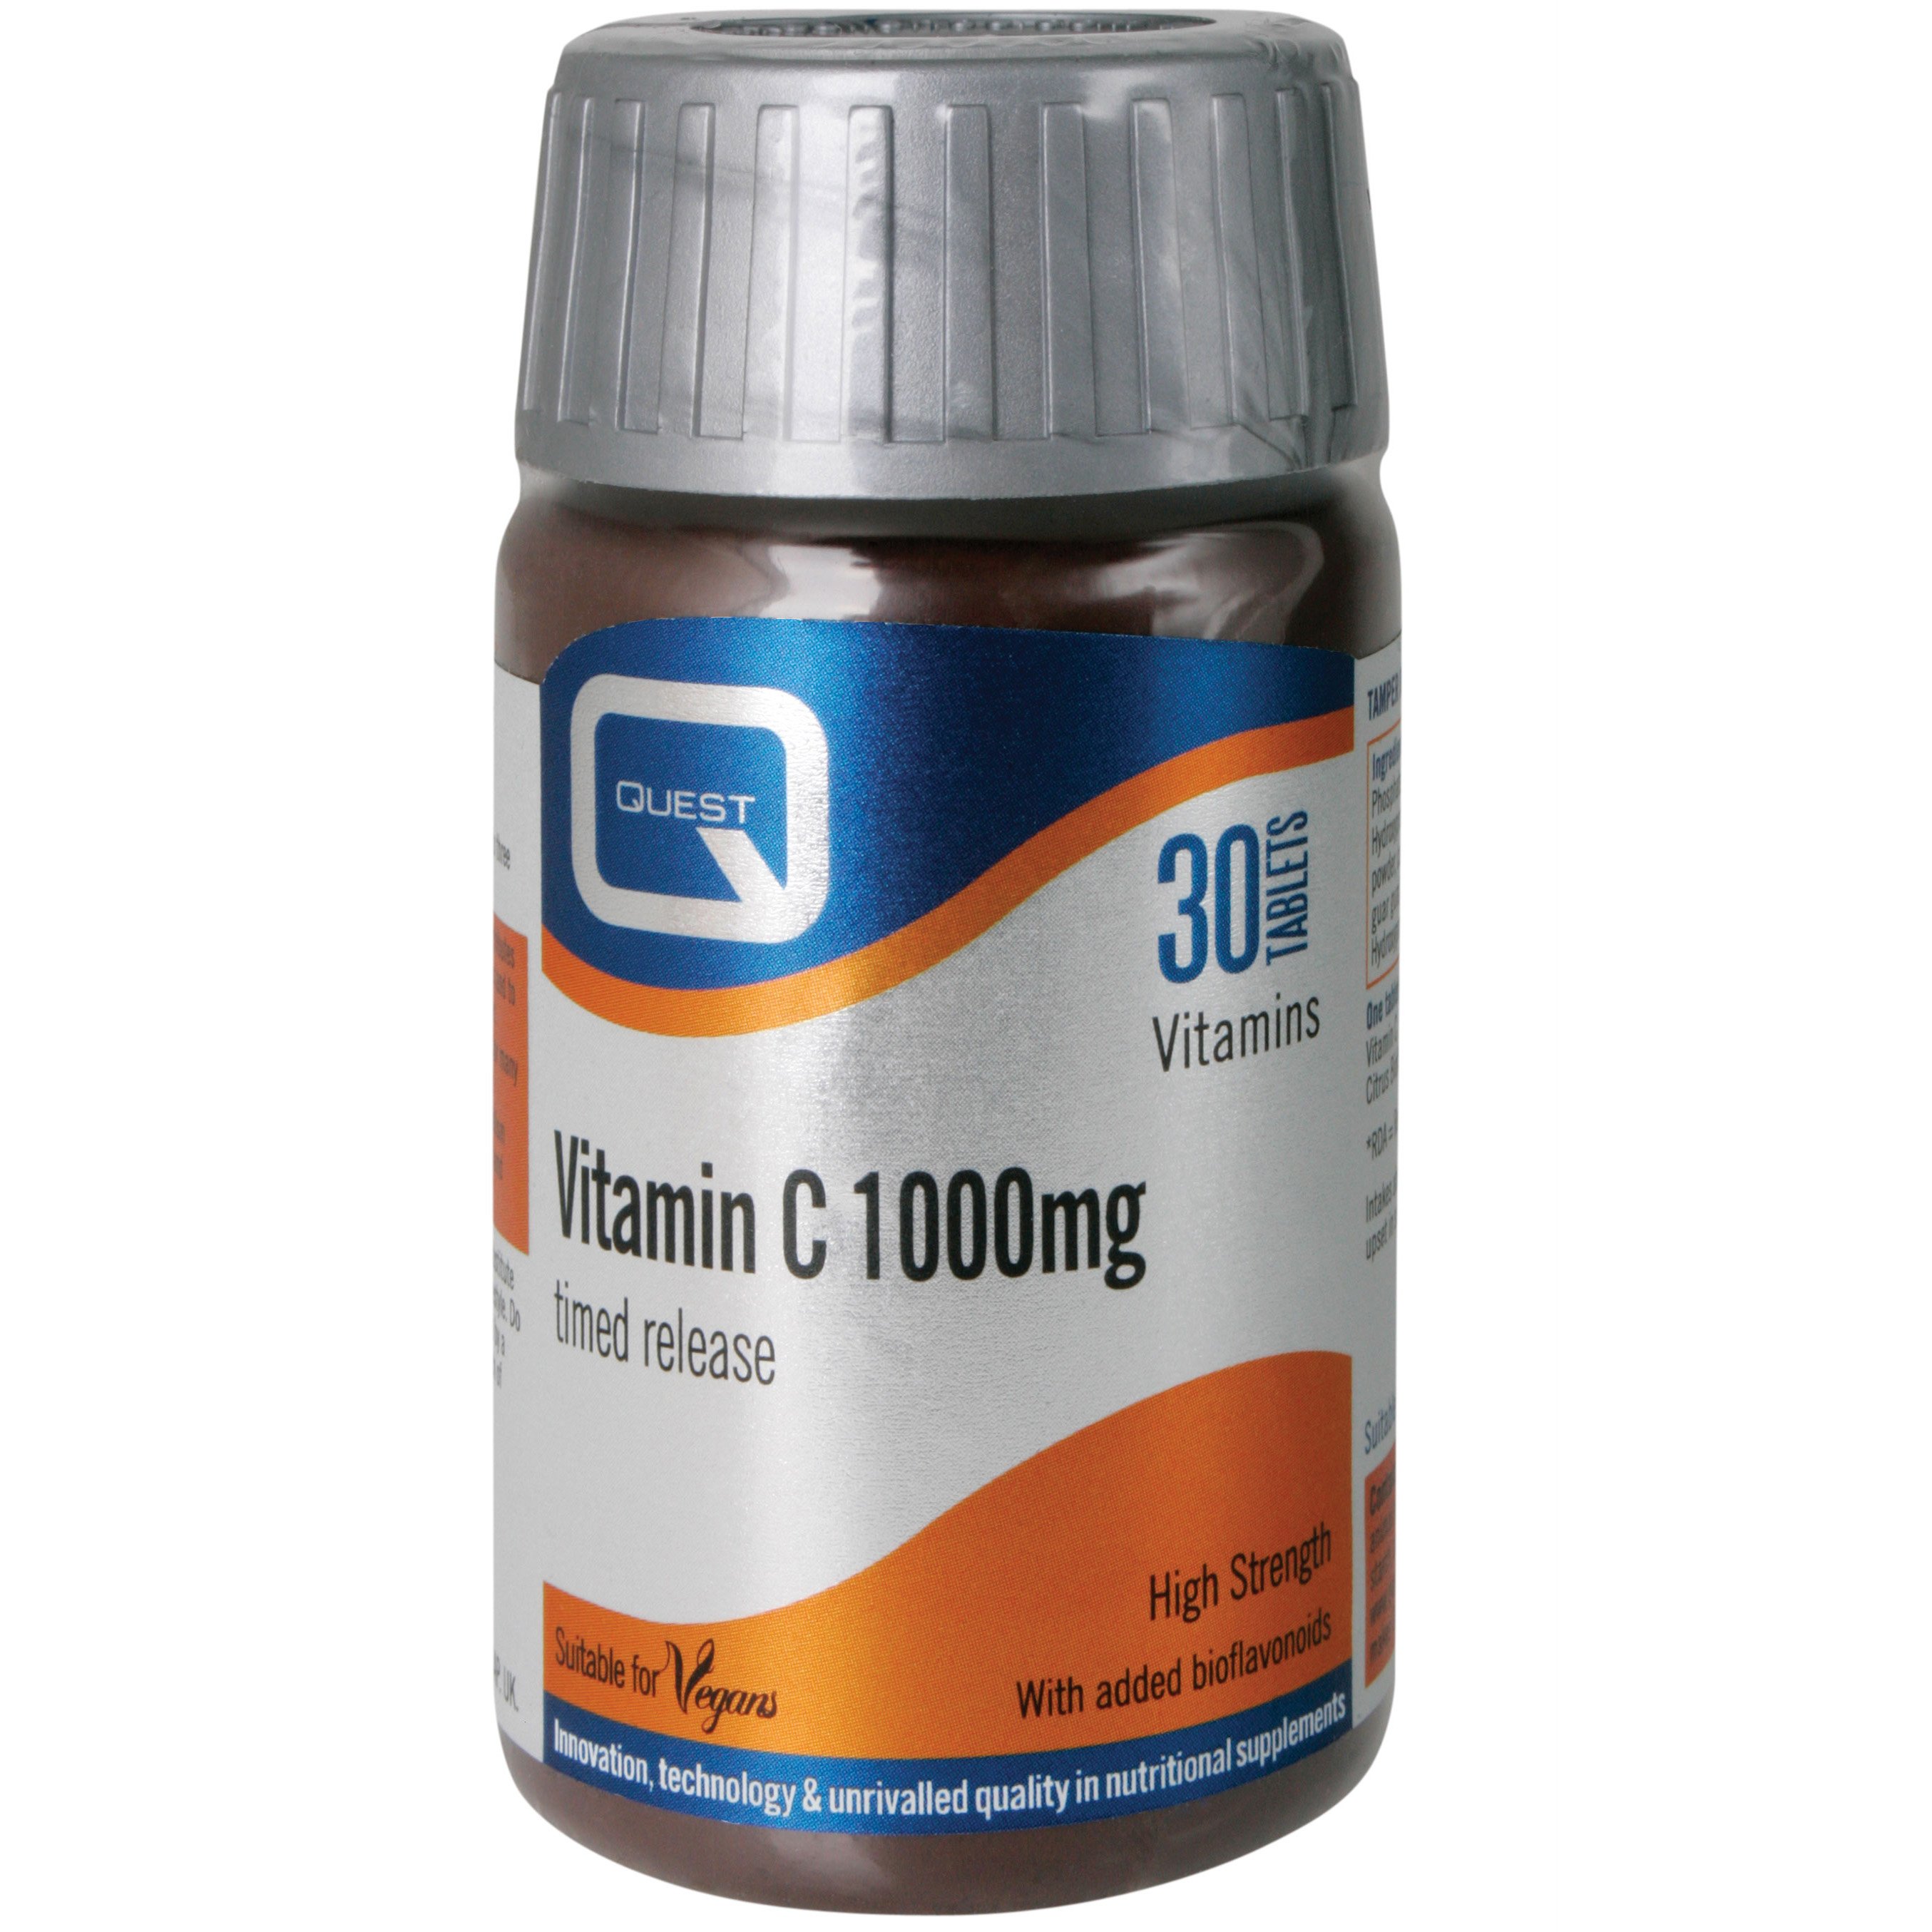 Quest Vitamin C 1000mg Timed Release Συμπλήρωμα Διατροφής Βιταμίνης C σε Συνδυασμό με Βιοφλαβονοειδή – 90 caps